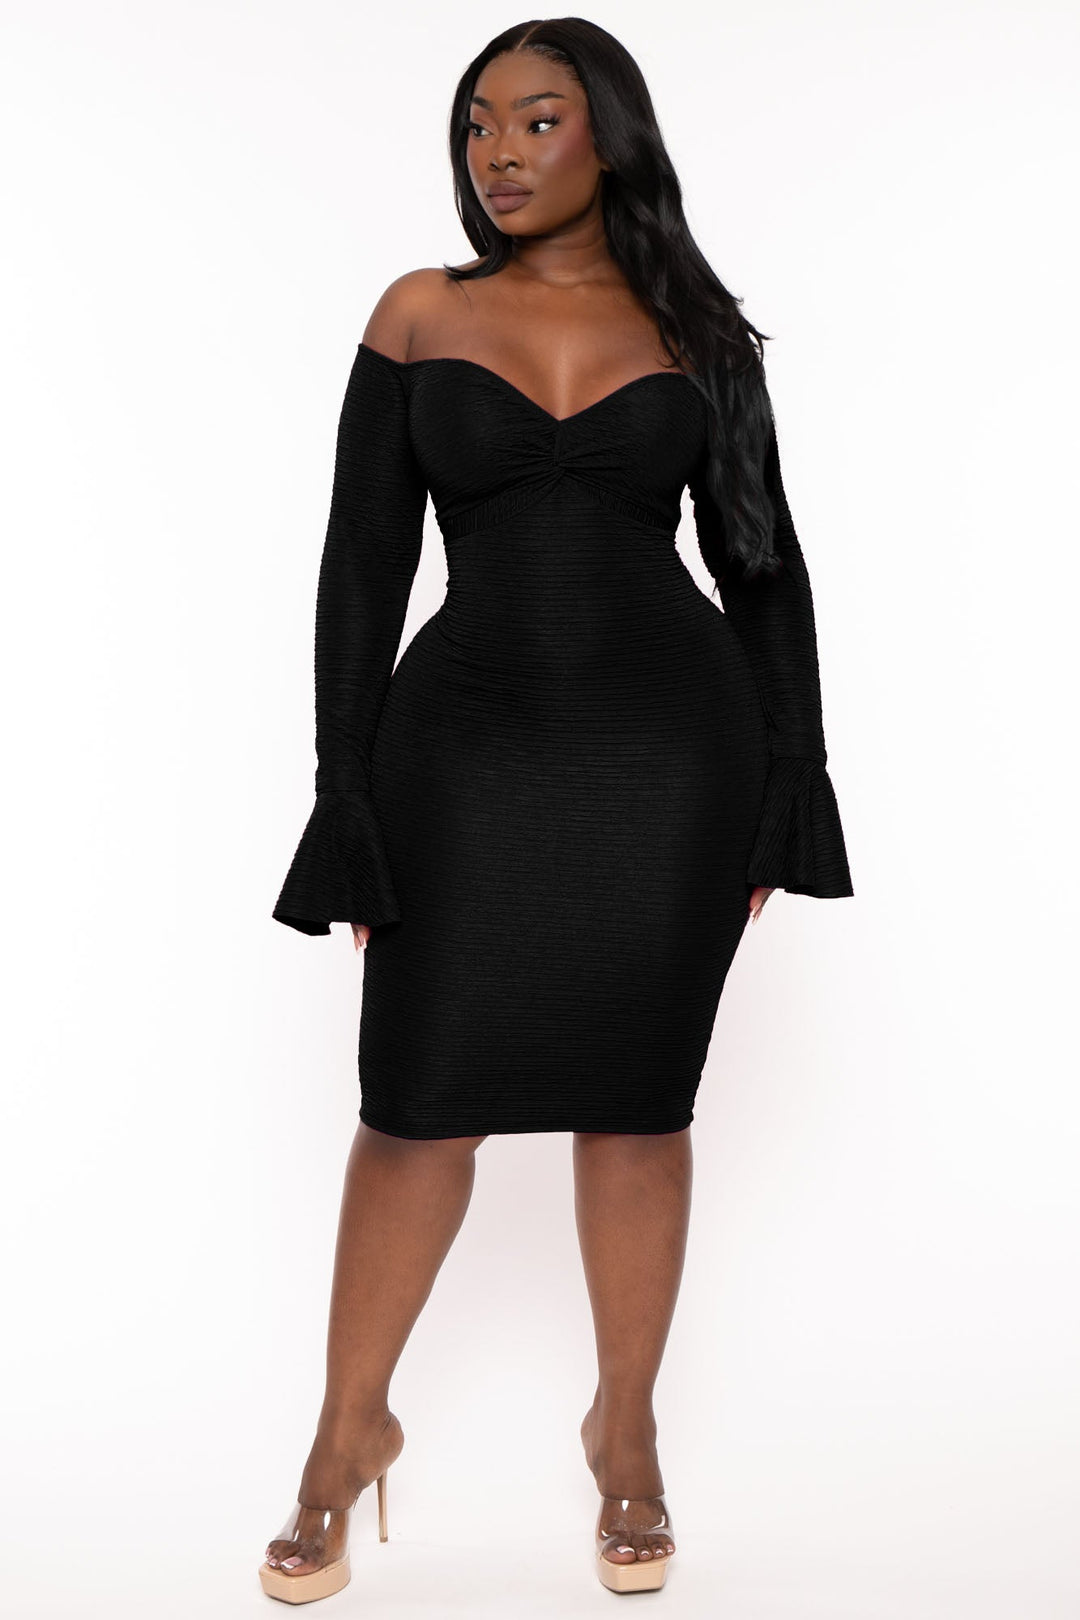 Curvy Sense Dresses Plus Size Maryliz Front Twist Bodycon Dress - Black